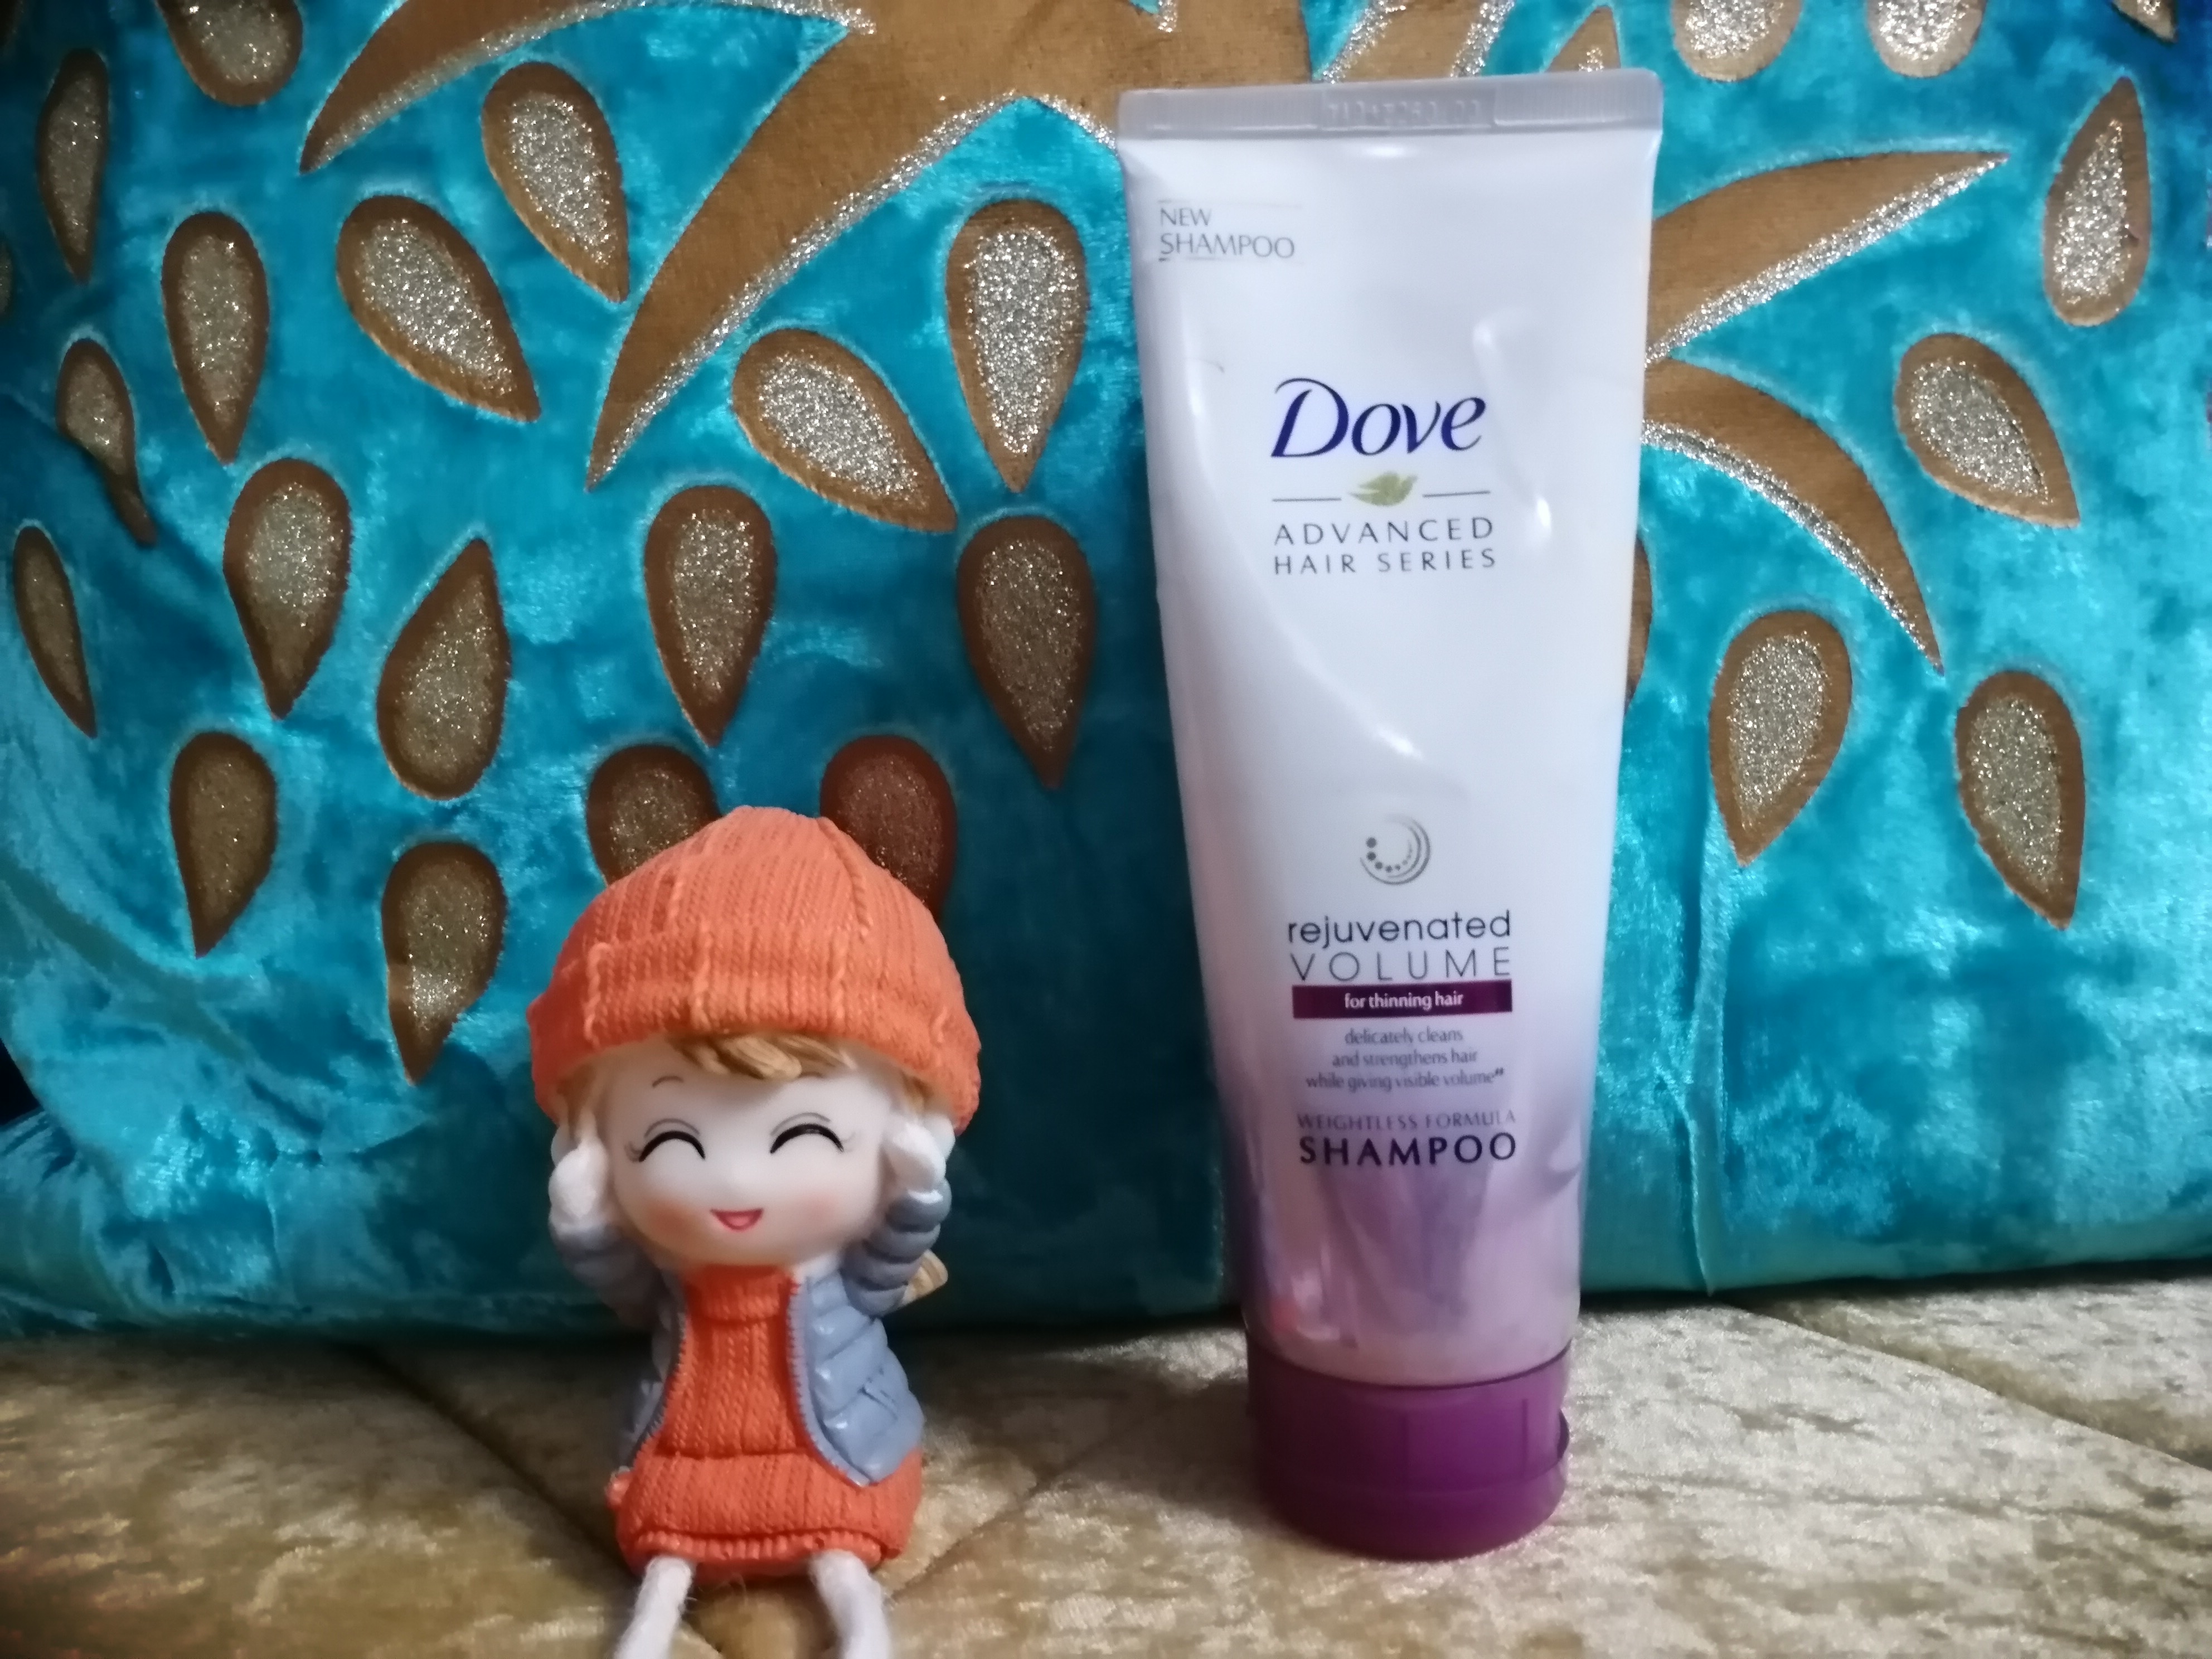 Dove Rejuvenated Volume Shampoo| Review